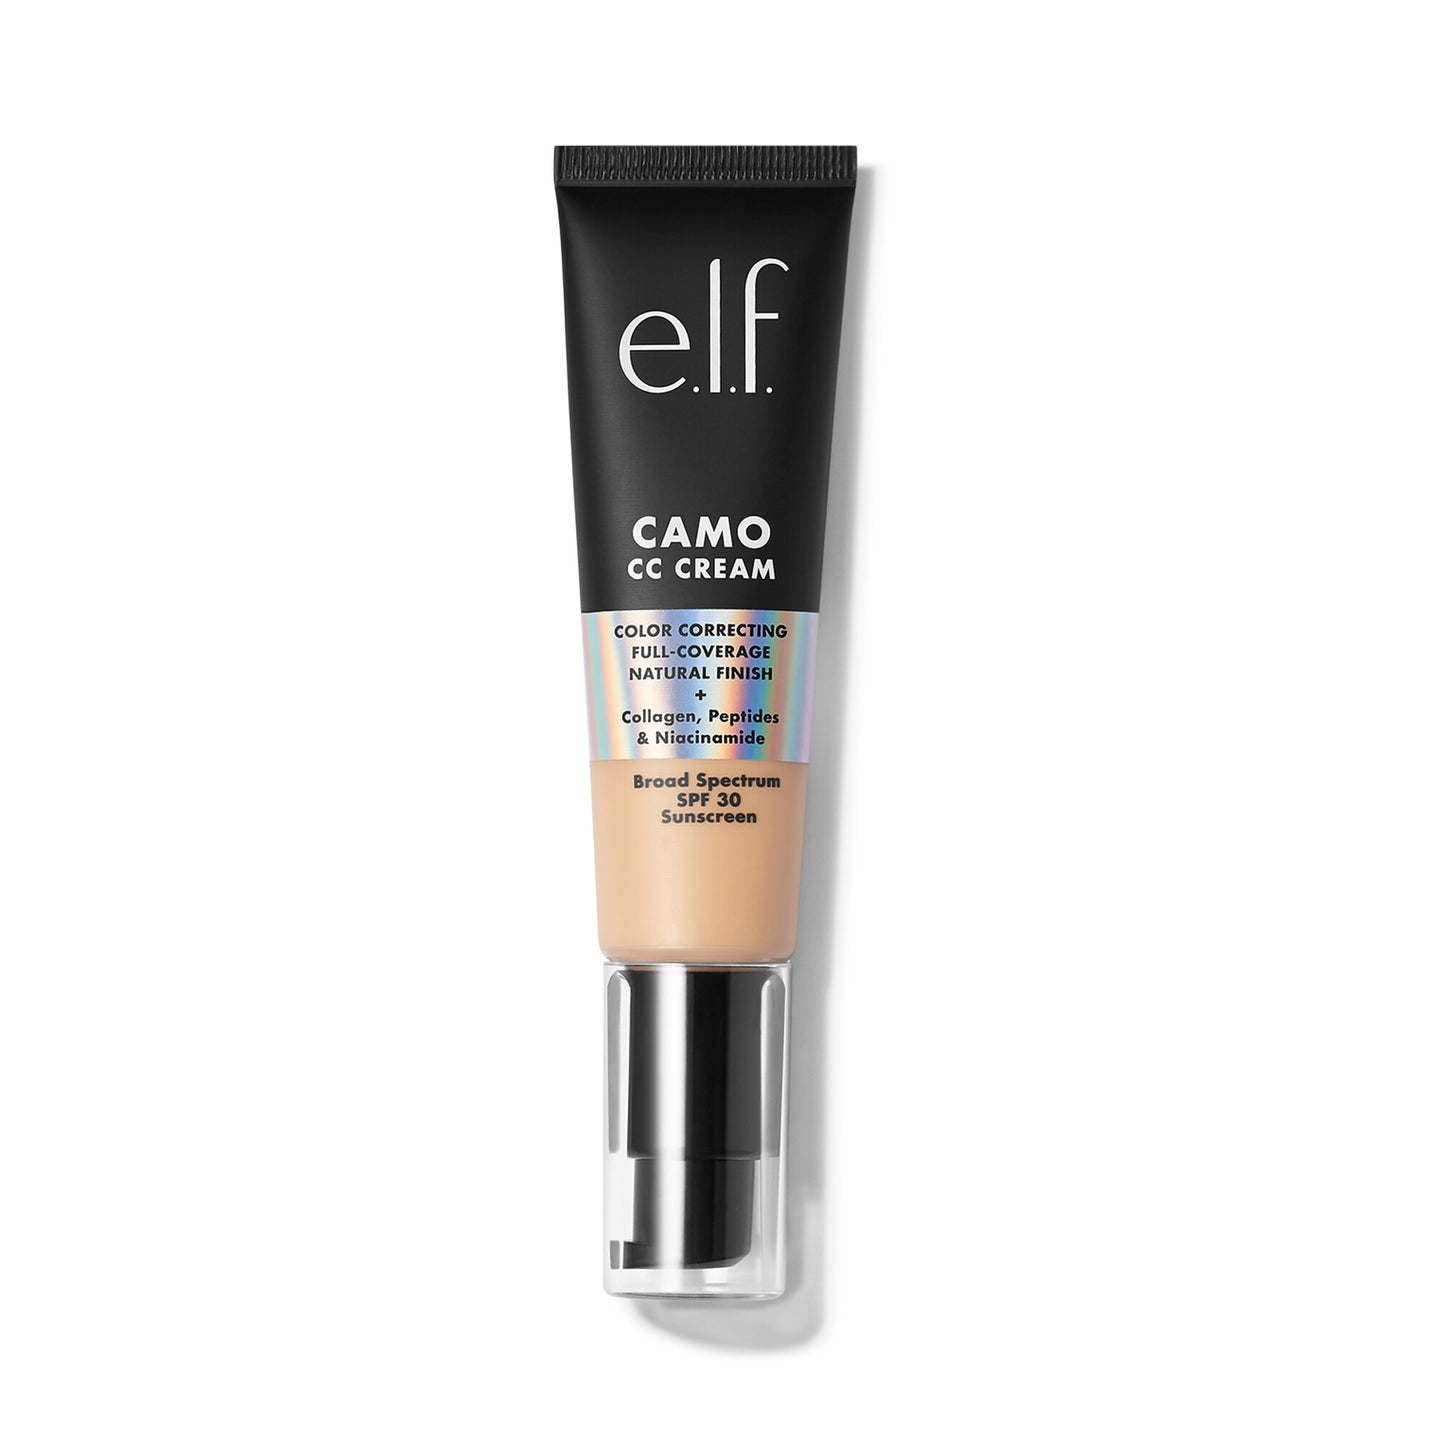 ELF Camo CC Cream Broad Spectrum SPF 30 Sunscreen 1.05 oz / 30g